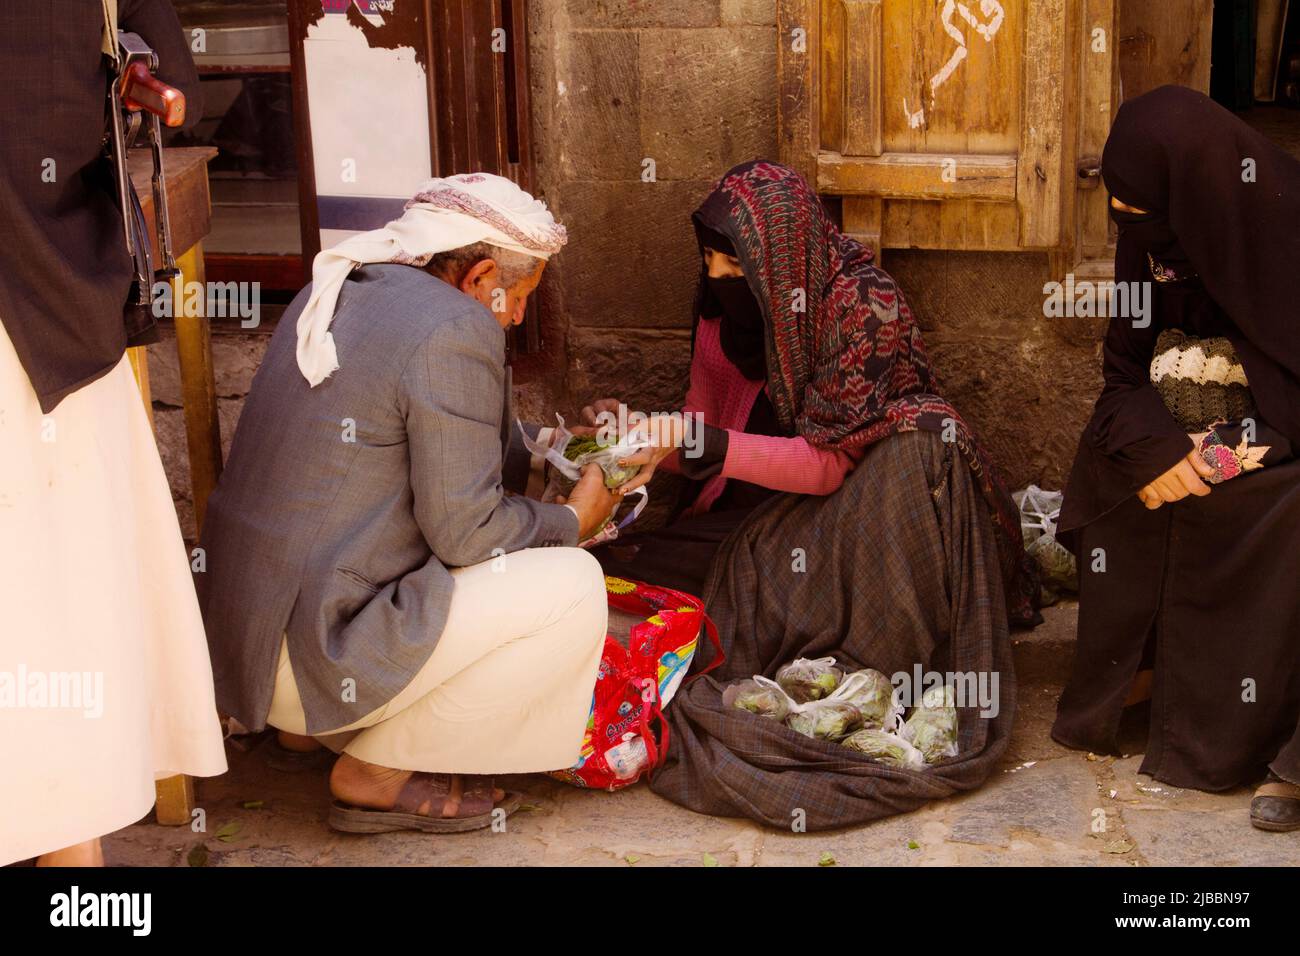 An elderly Yemeni woman selling the famous Qat plant in Yemen Stock Photo